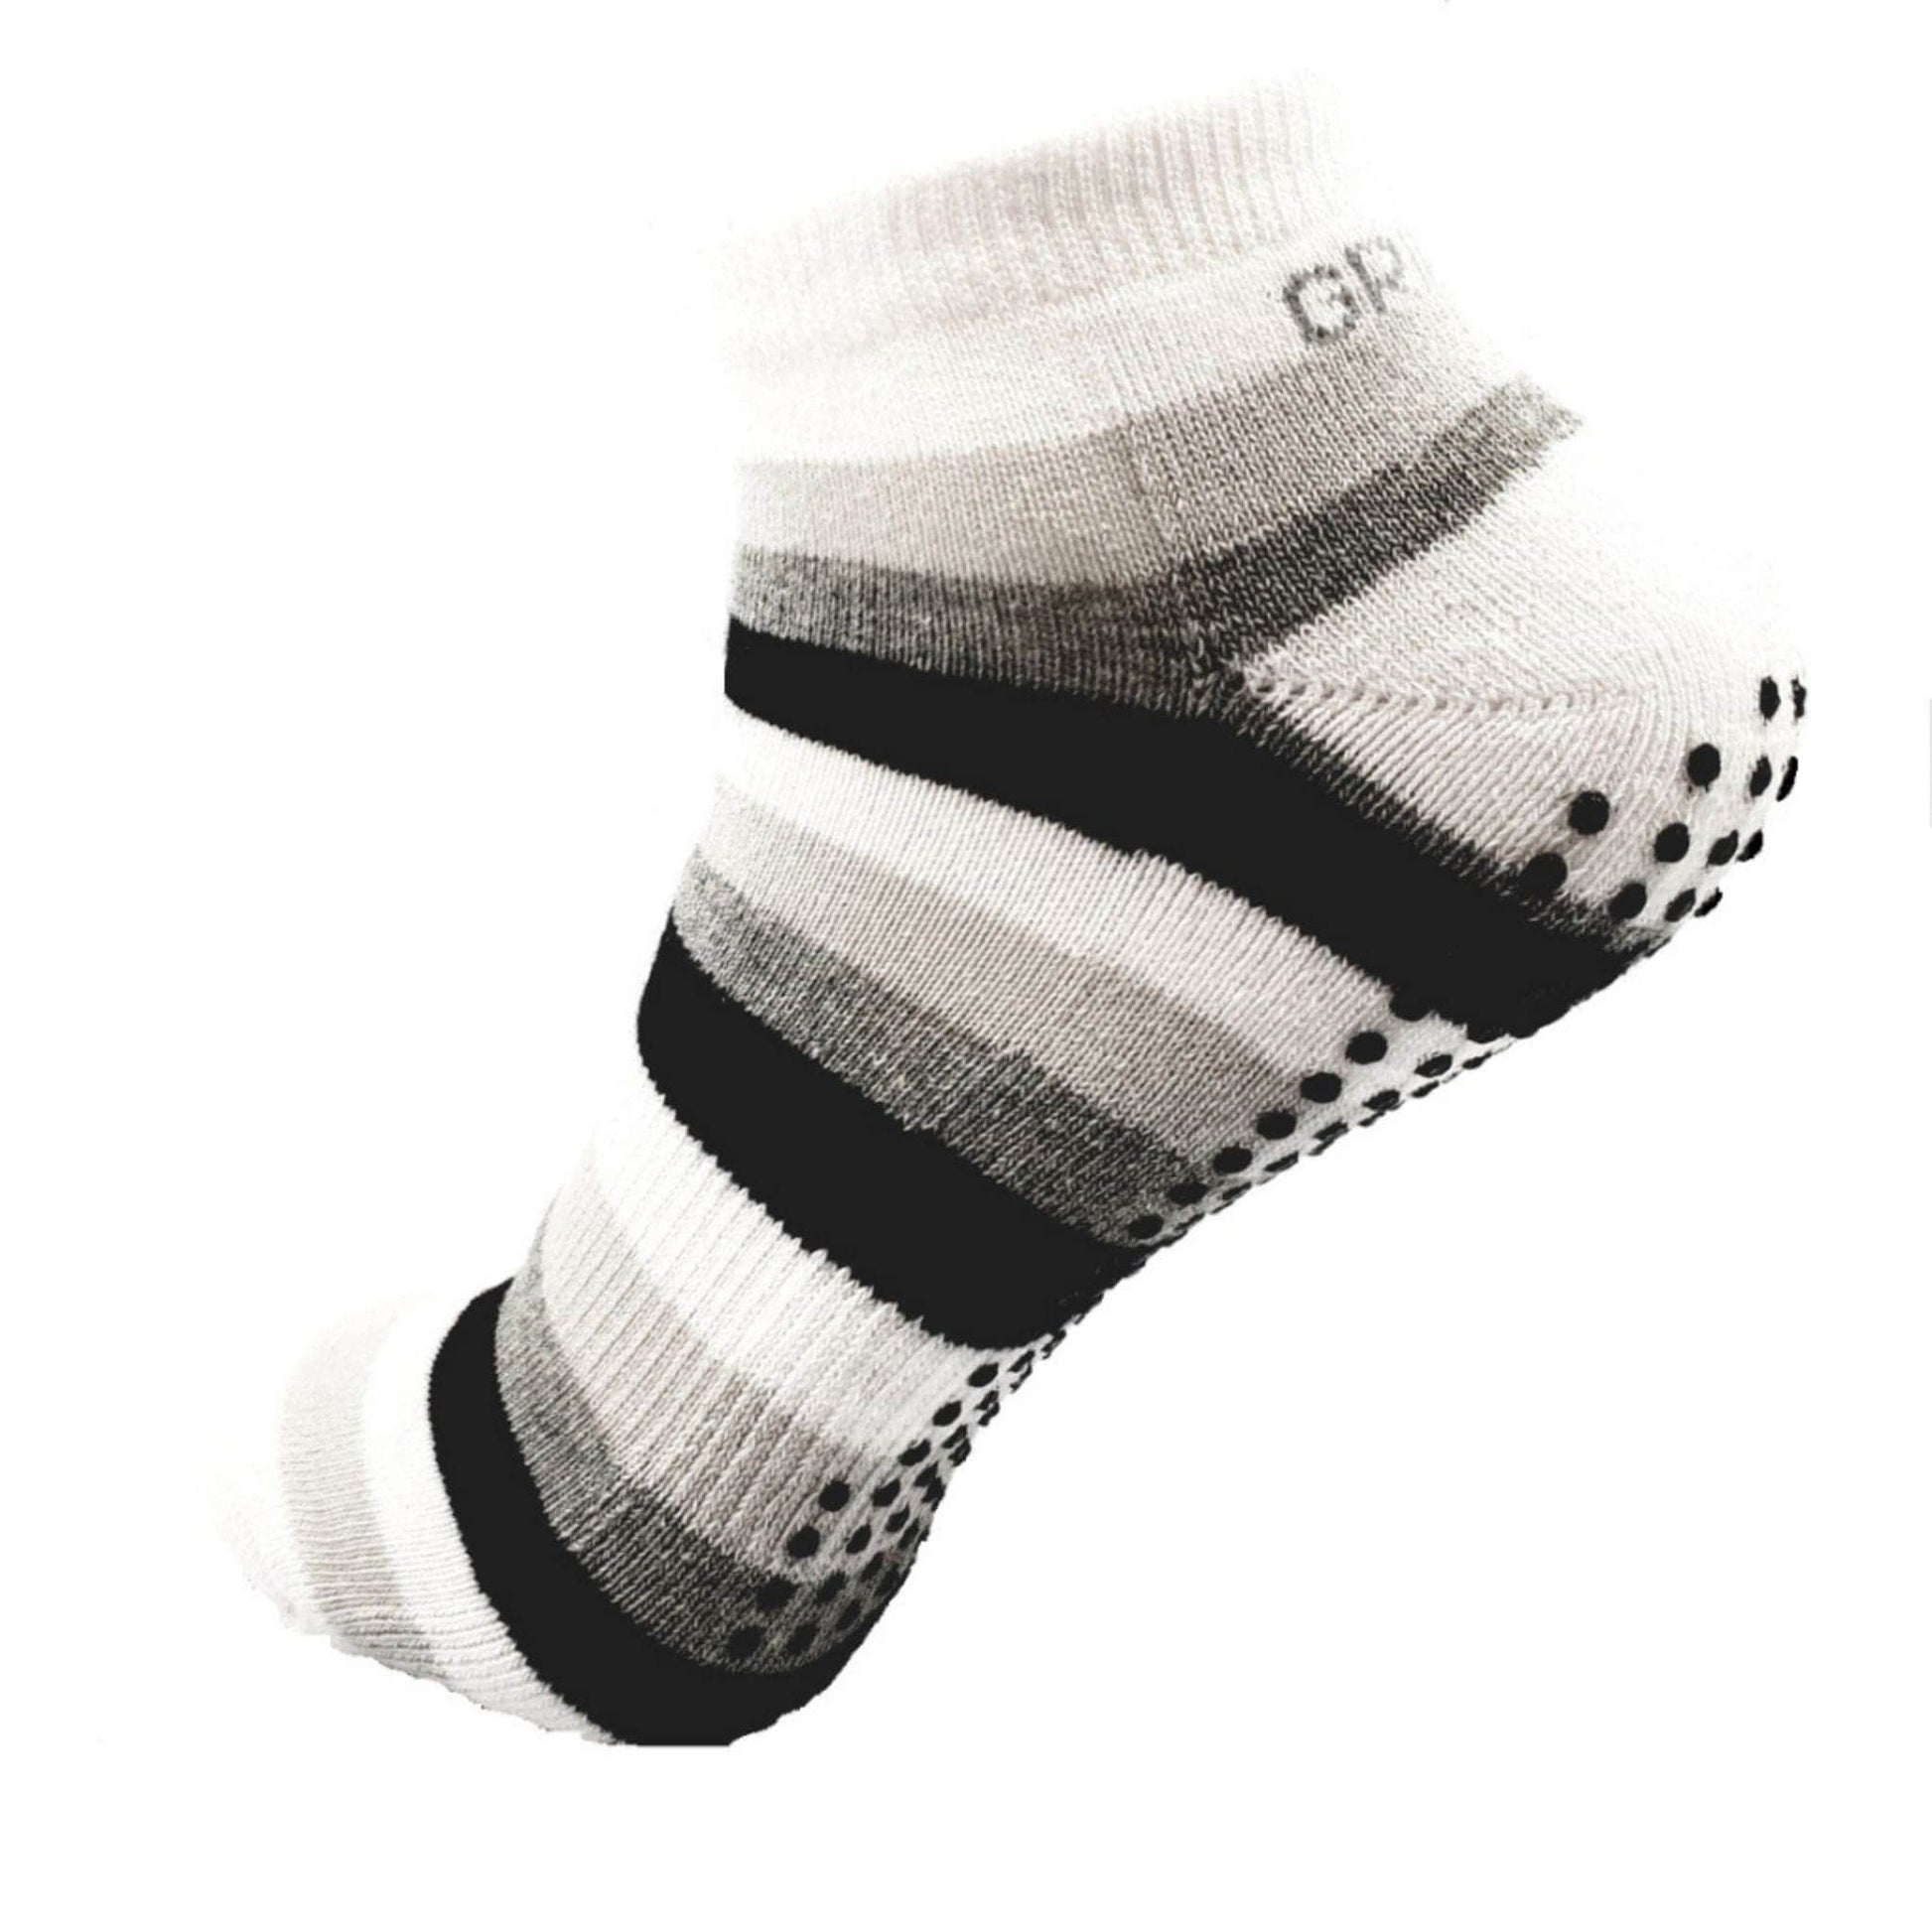 Gripperz Kids Grip Socks - Non Slip Active Ankle Socks - Caring Clothing